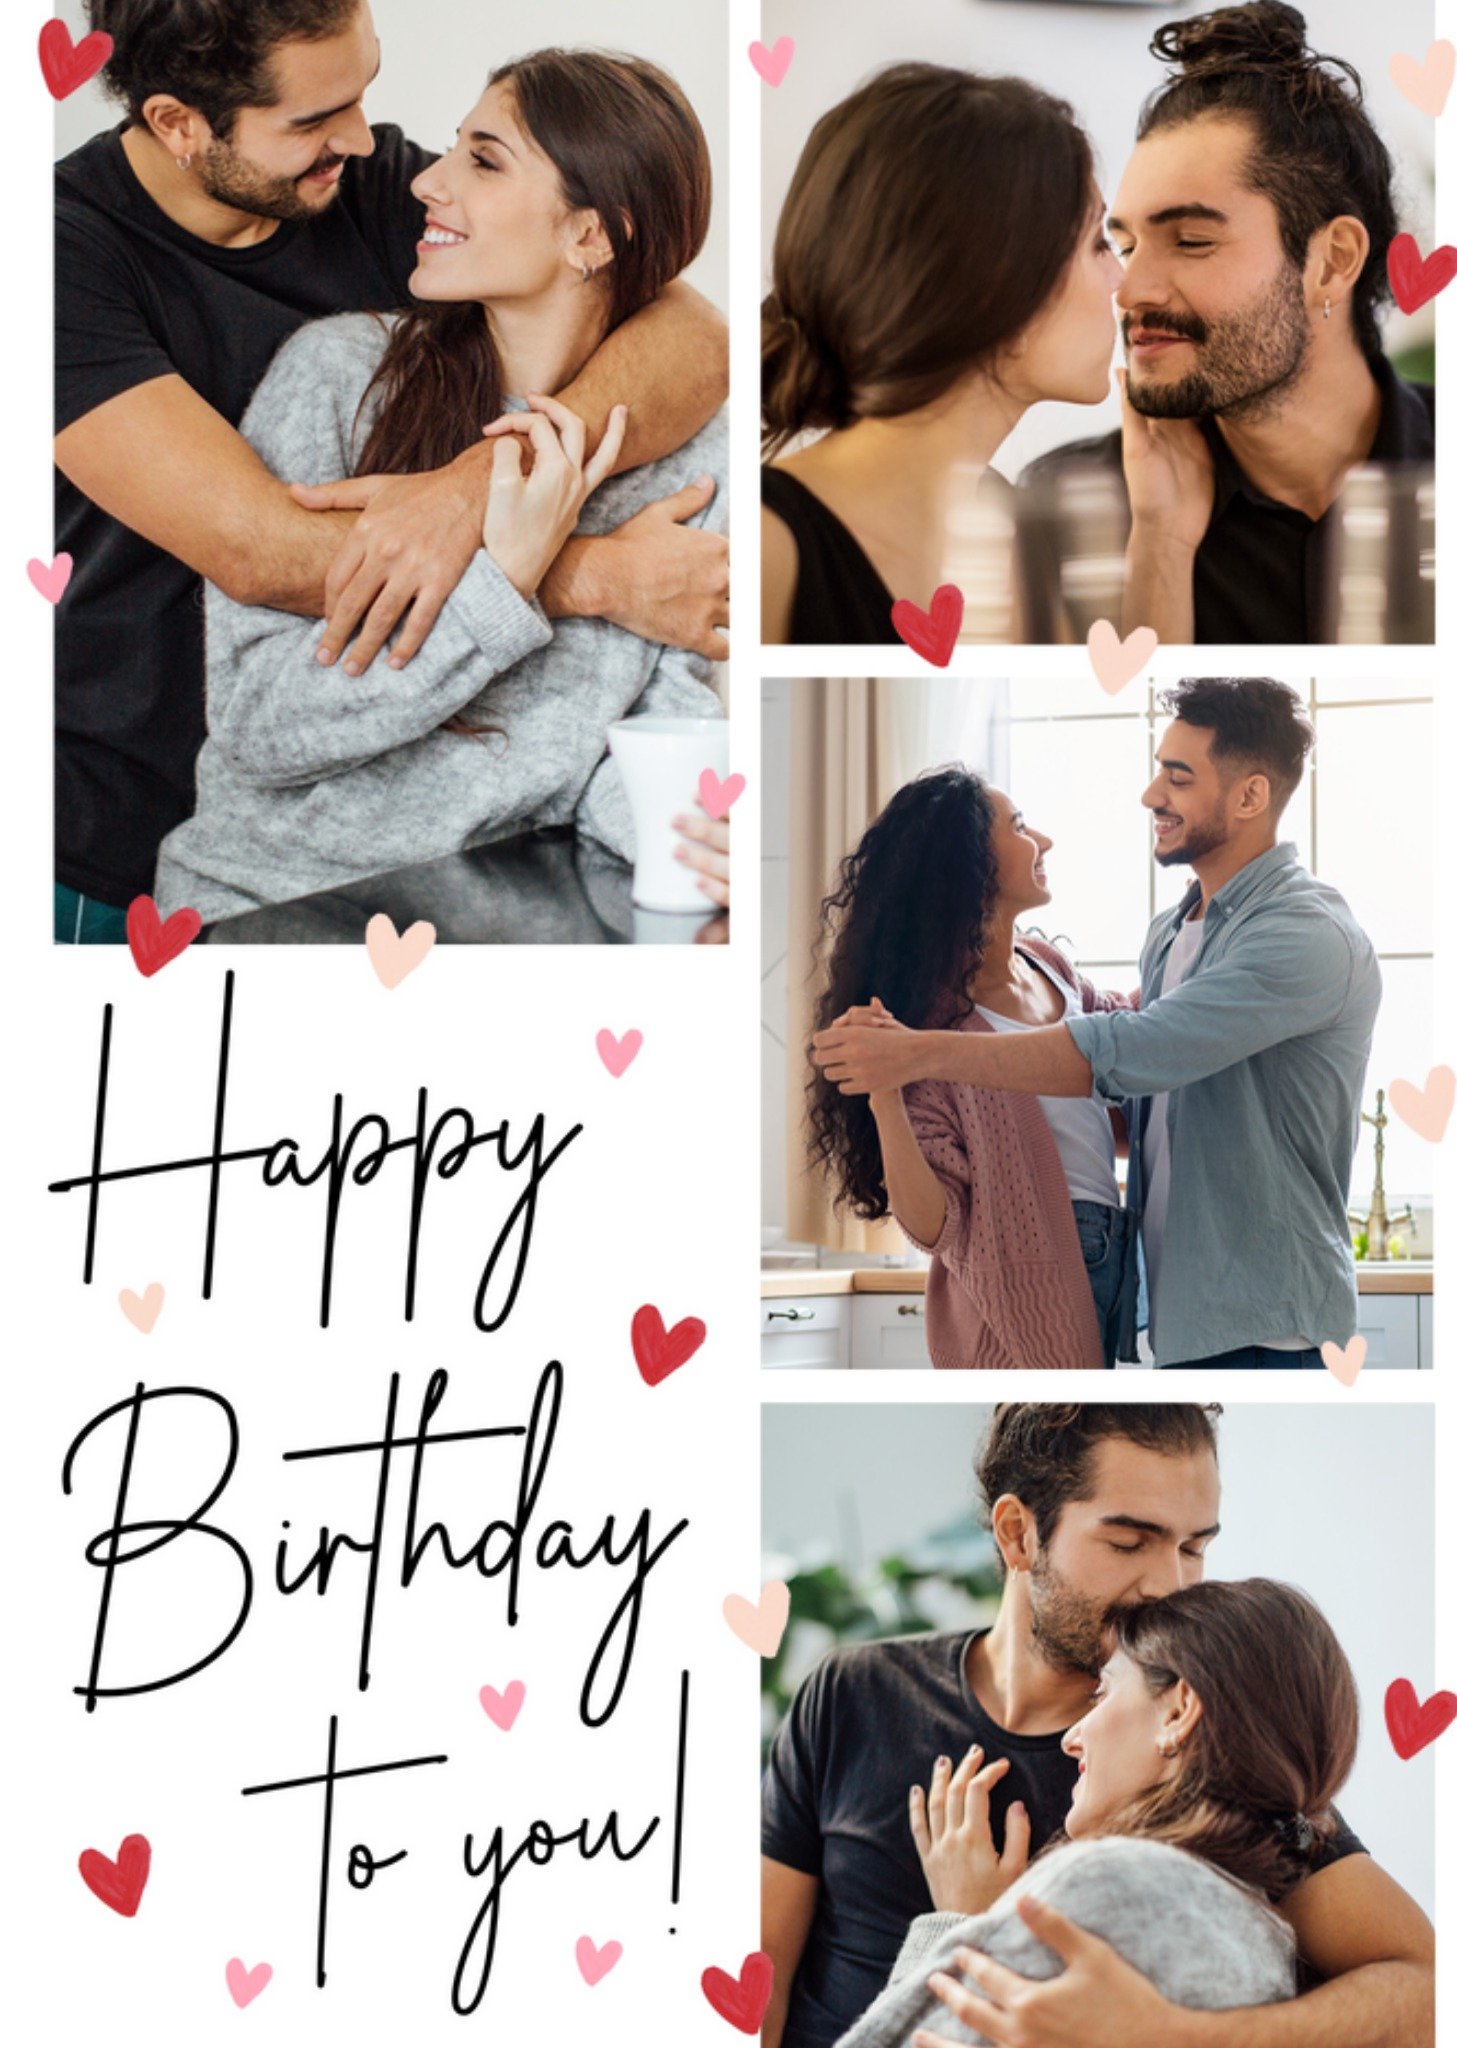 Moonpig Adoring Love Hearts Collage Photo Upload Birthday Greetings Card, Large